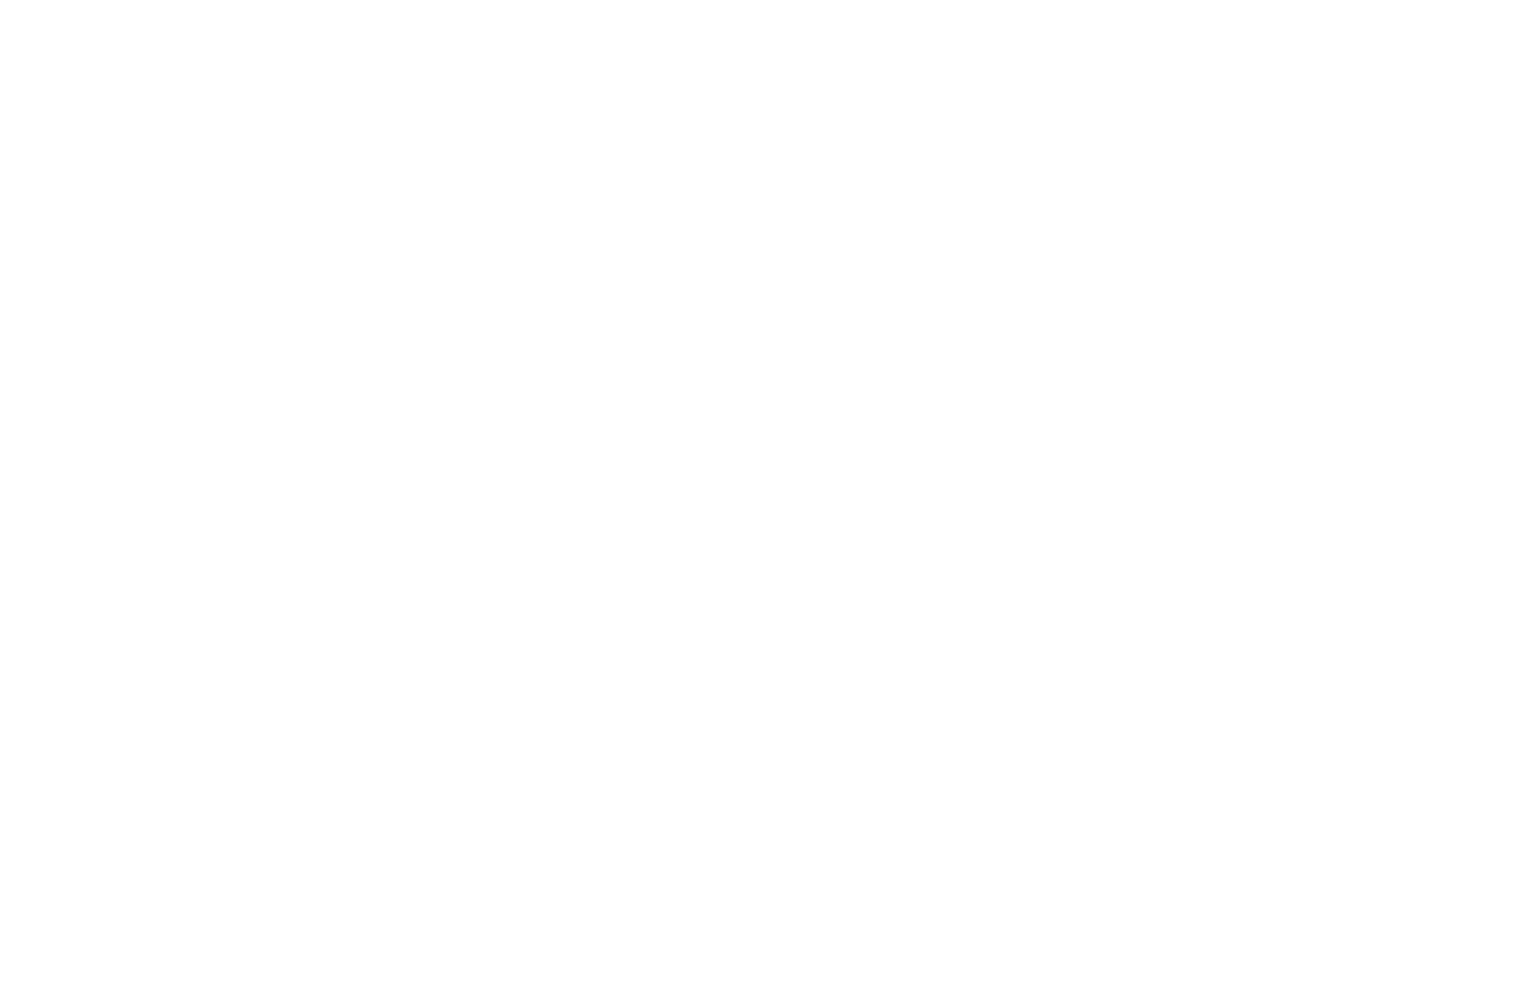 Asset World Corp logo large for dark backgrounds (transparent PNG)